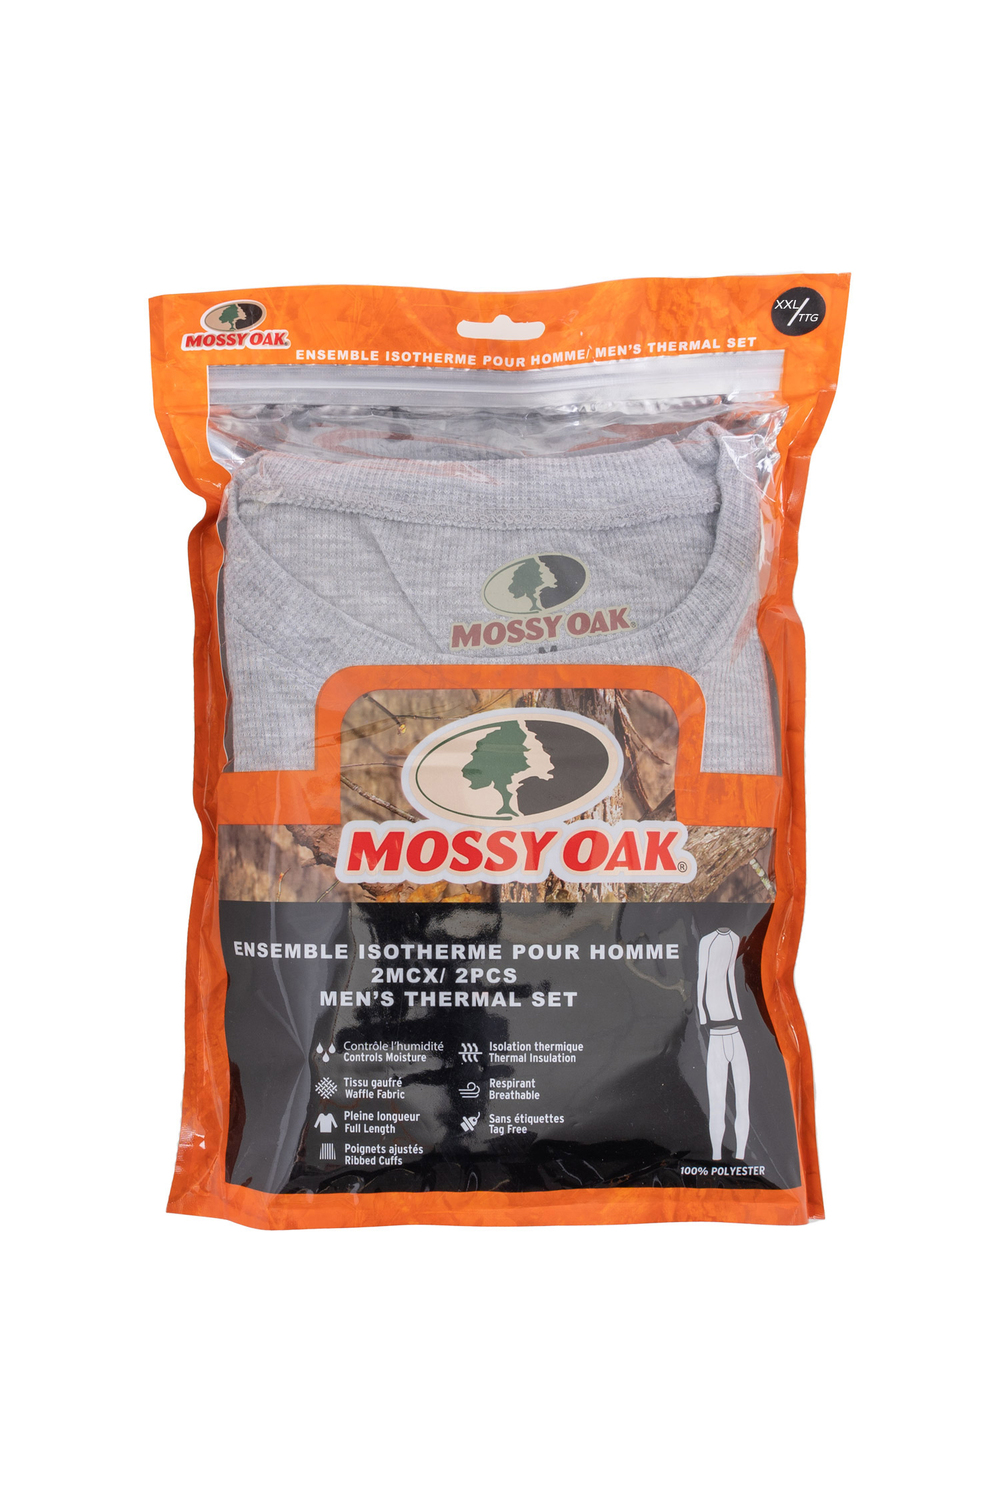 Mossy Oak - Men's 2 piece thermal set, grey, extra extra large (XXL)